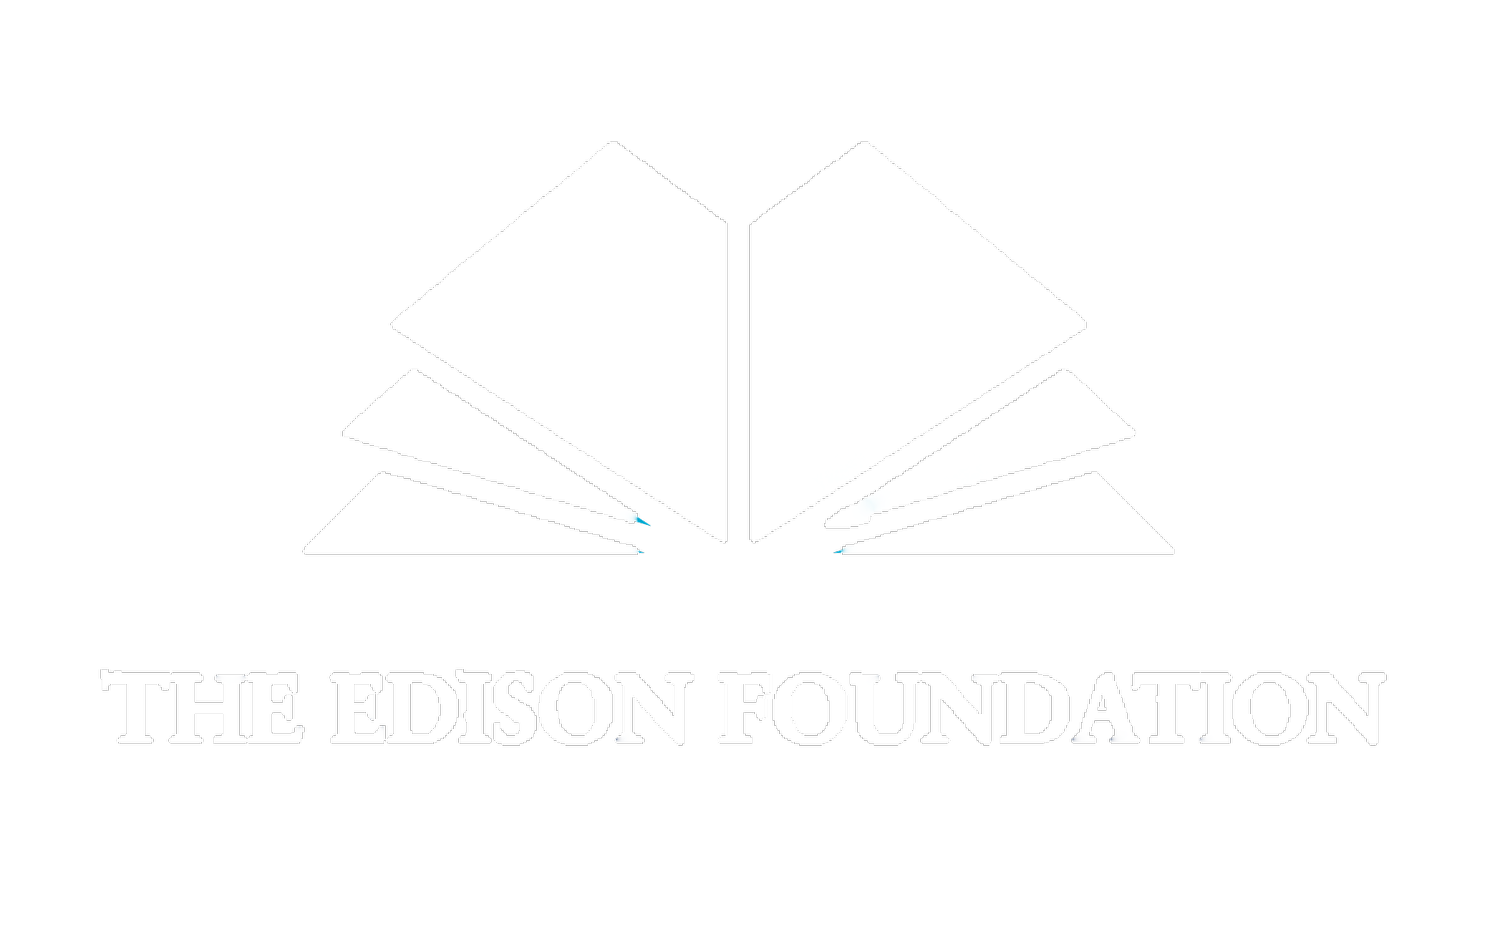 The Edison Foundation